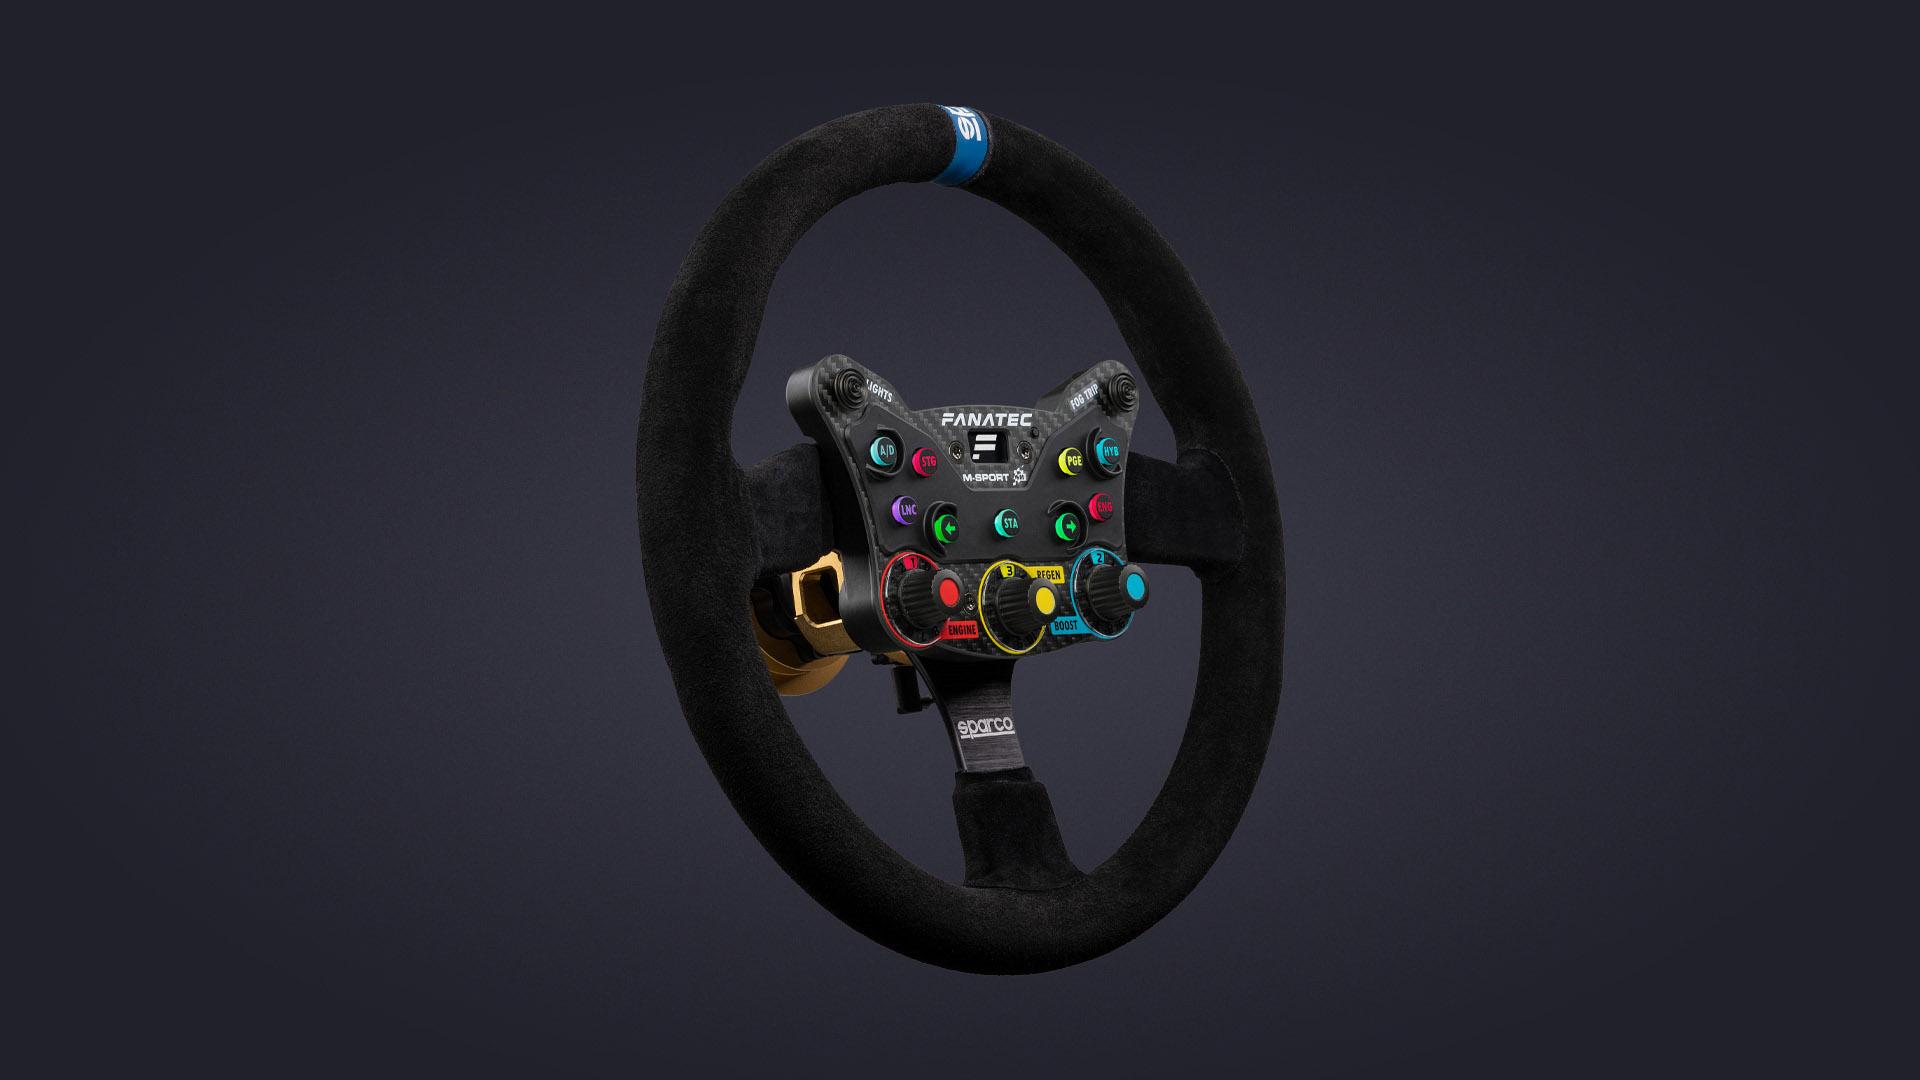 Fanatec's rally-winning button module and wheel bundle finally